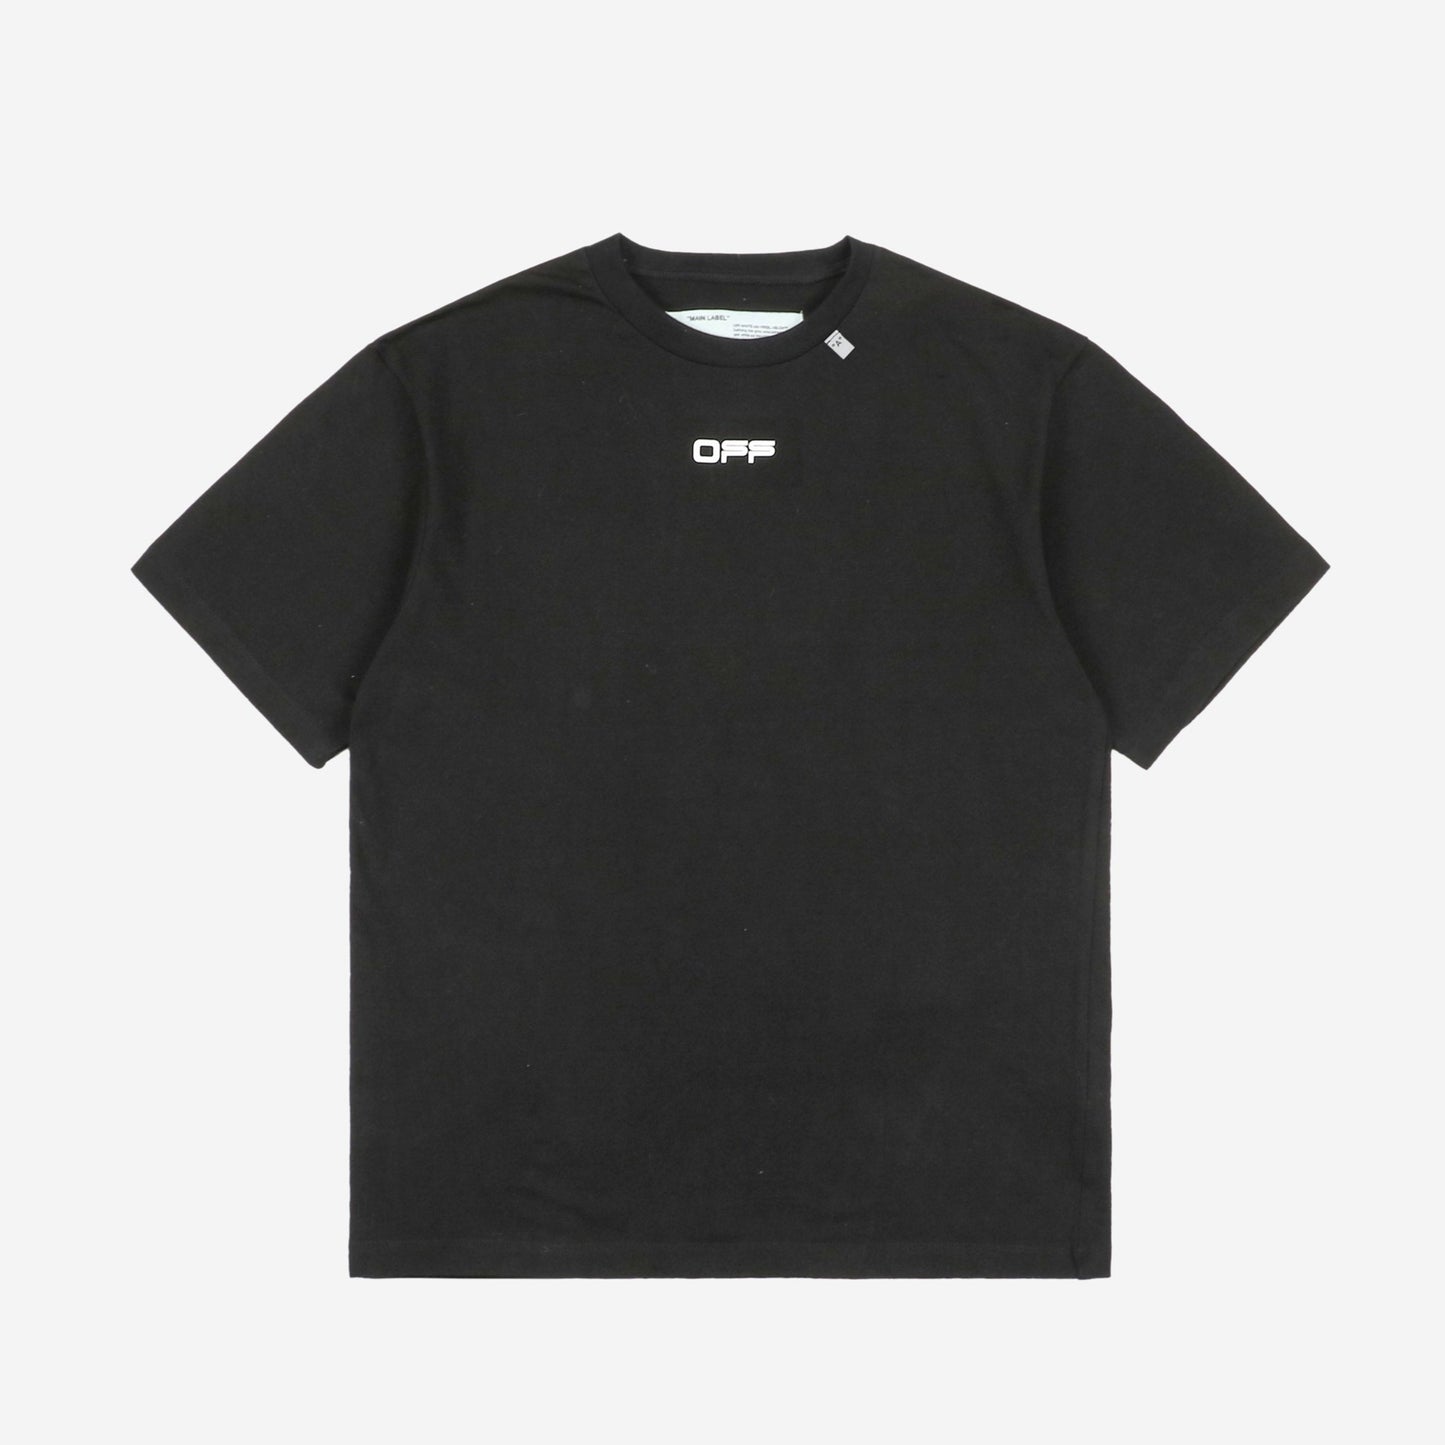 OW Black T-Shirt 9